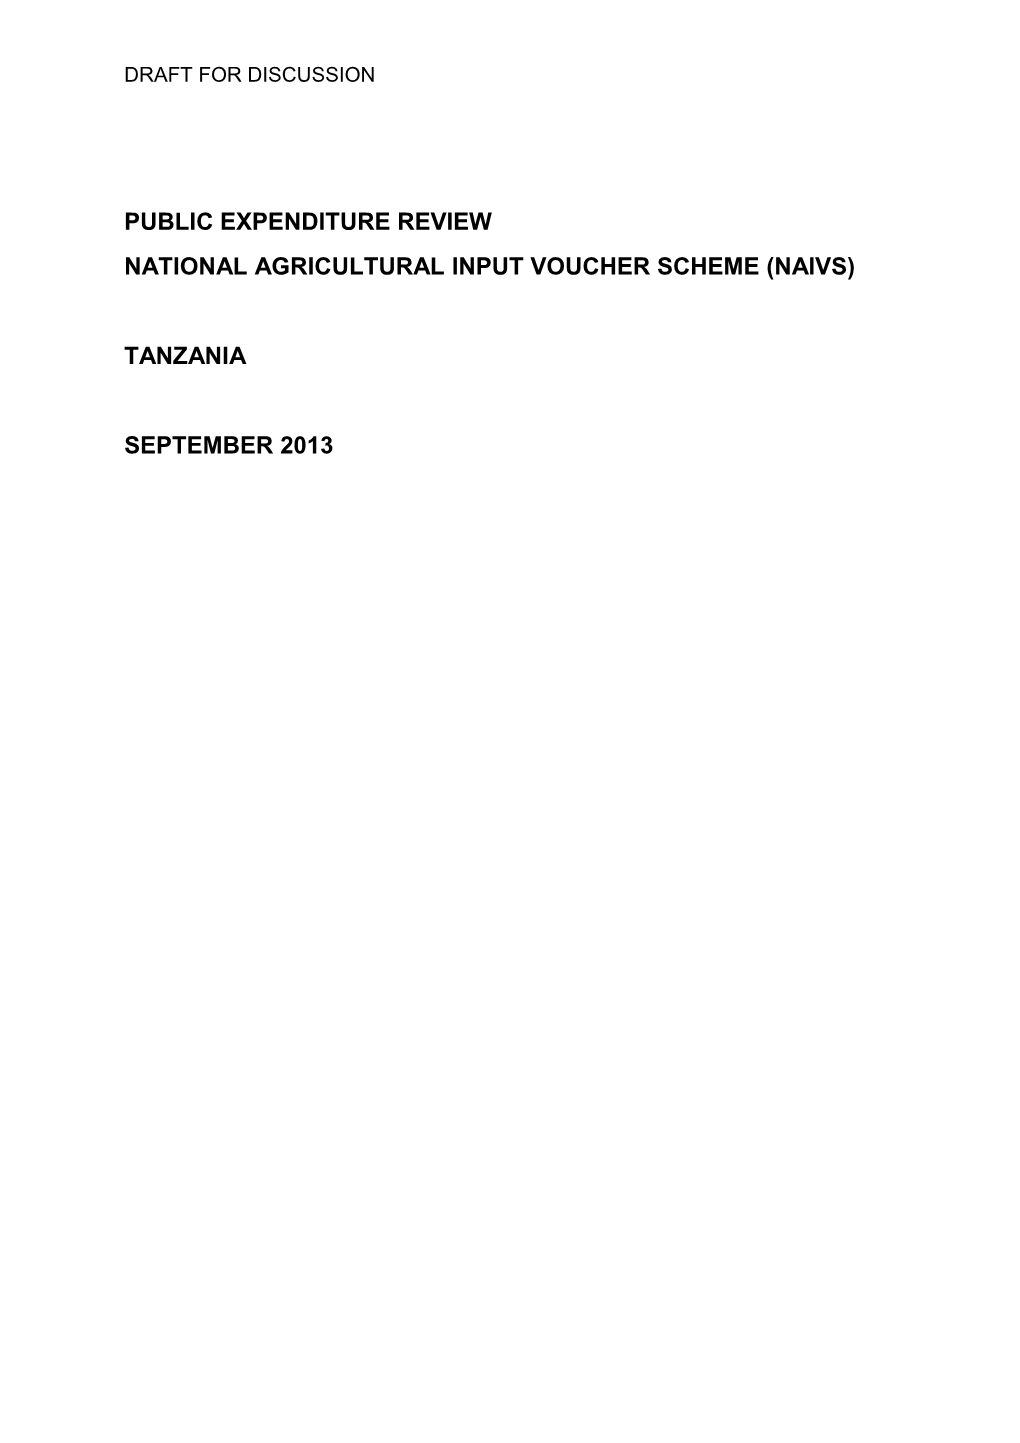 National Agricultural Input Voucher Scheme (Naivs)